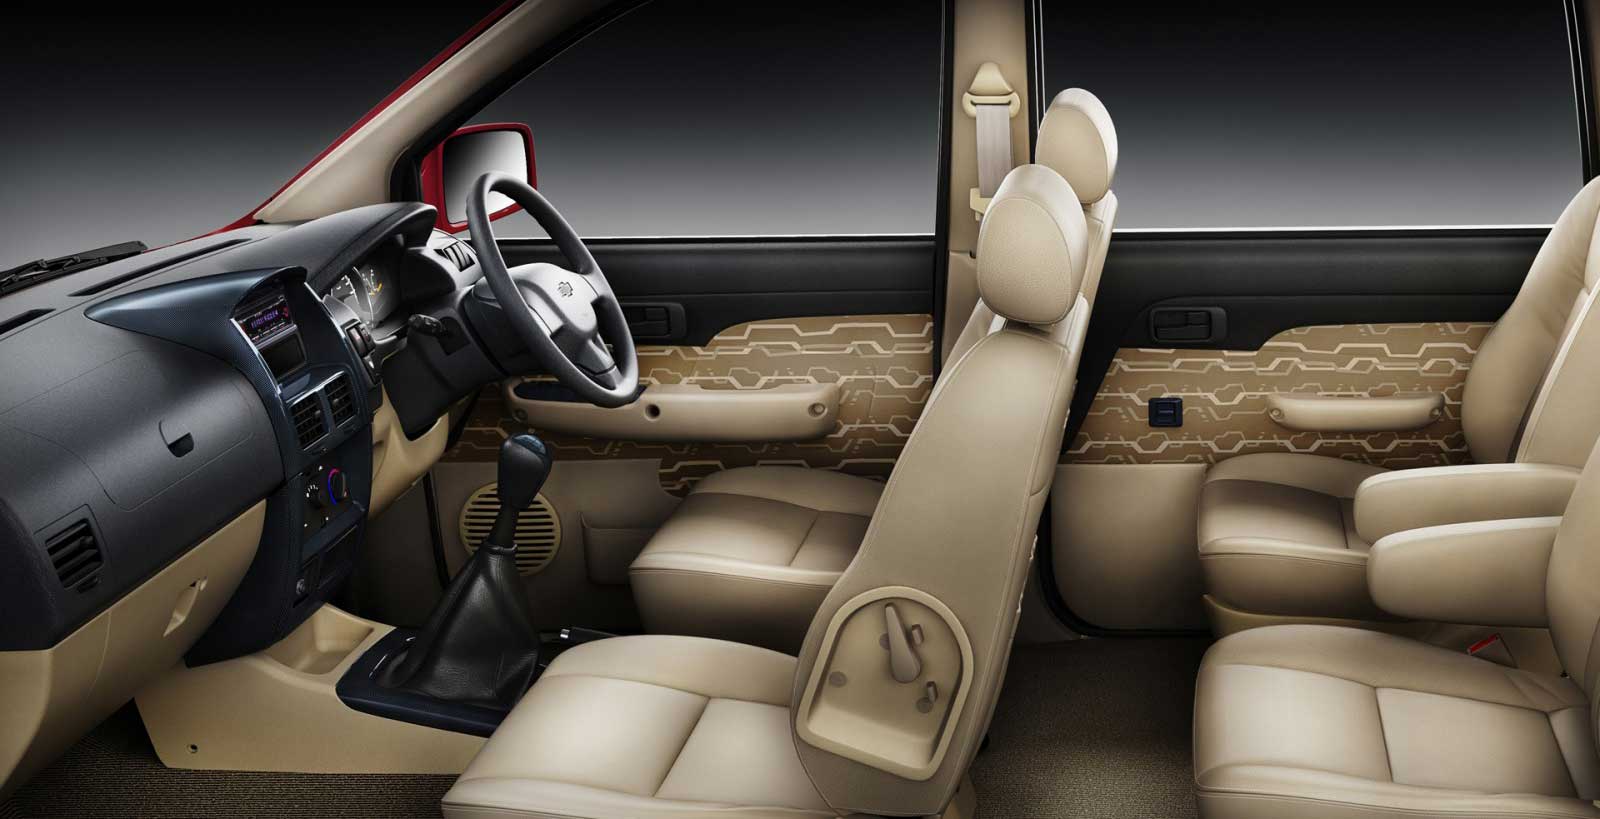 Chevrolet Tavera Neo 3 Ls 7 C Str Bsiii Interior Image